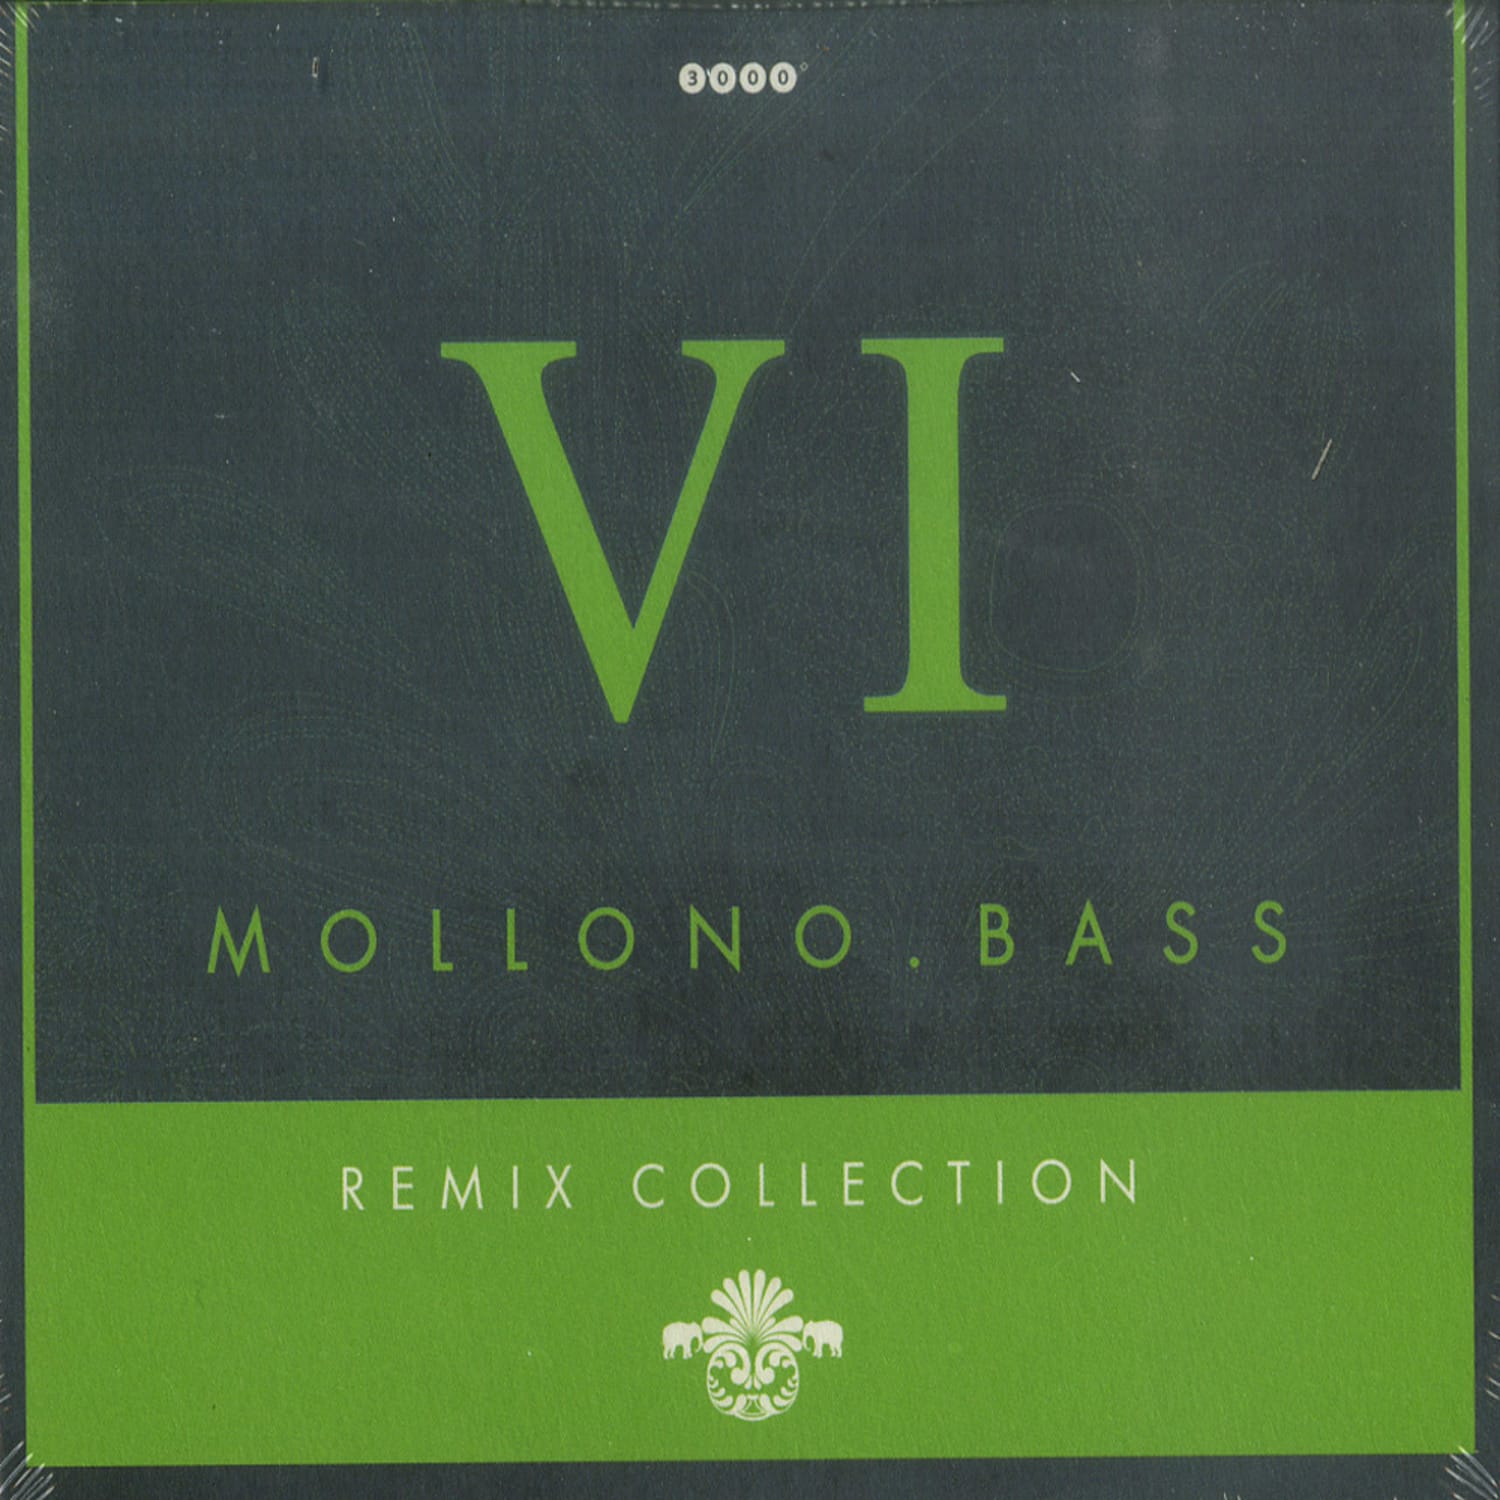 Mollono.Bass - REMIX COLLECTION 6 